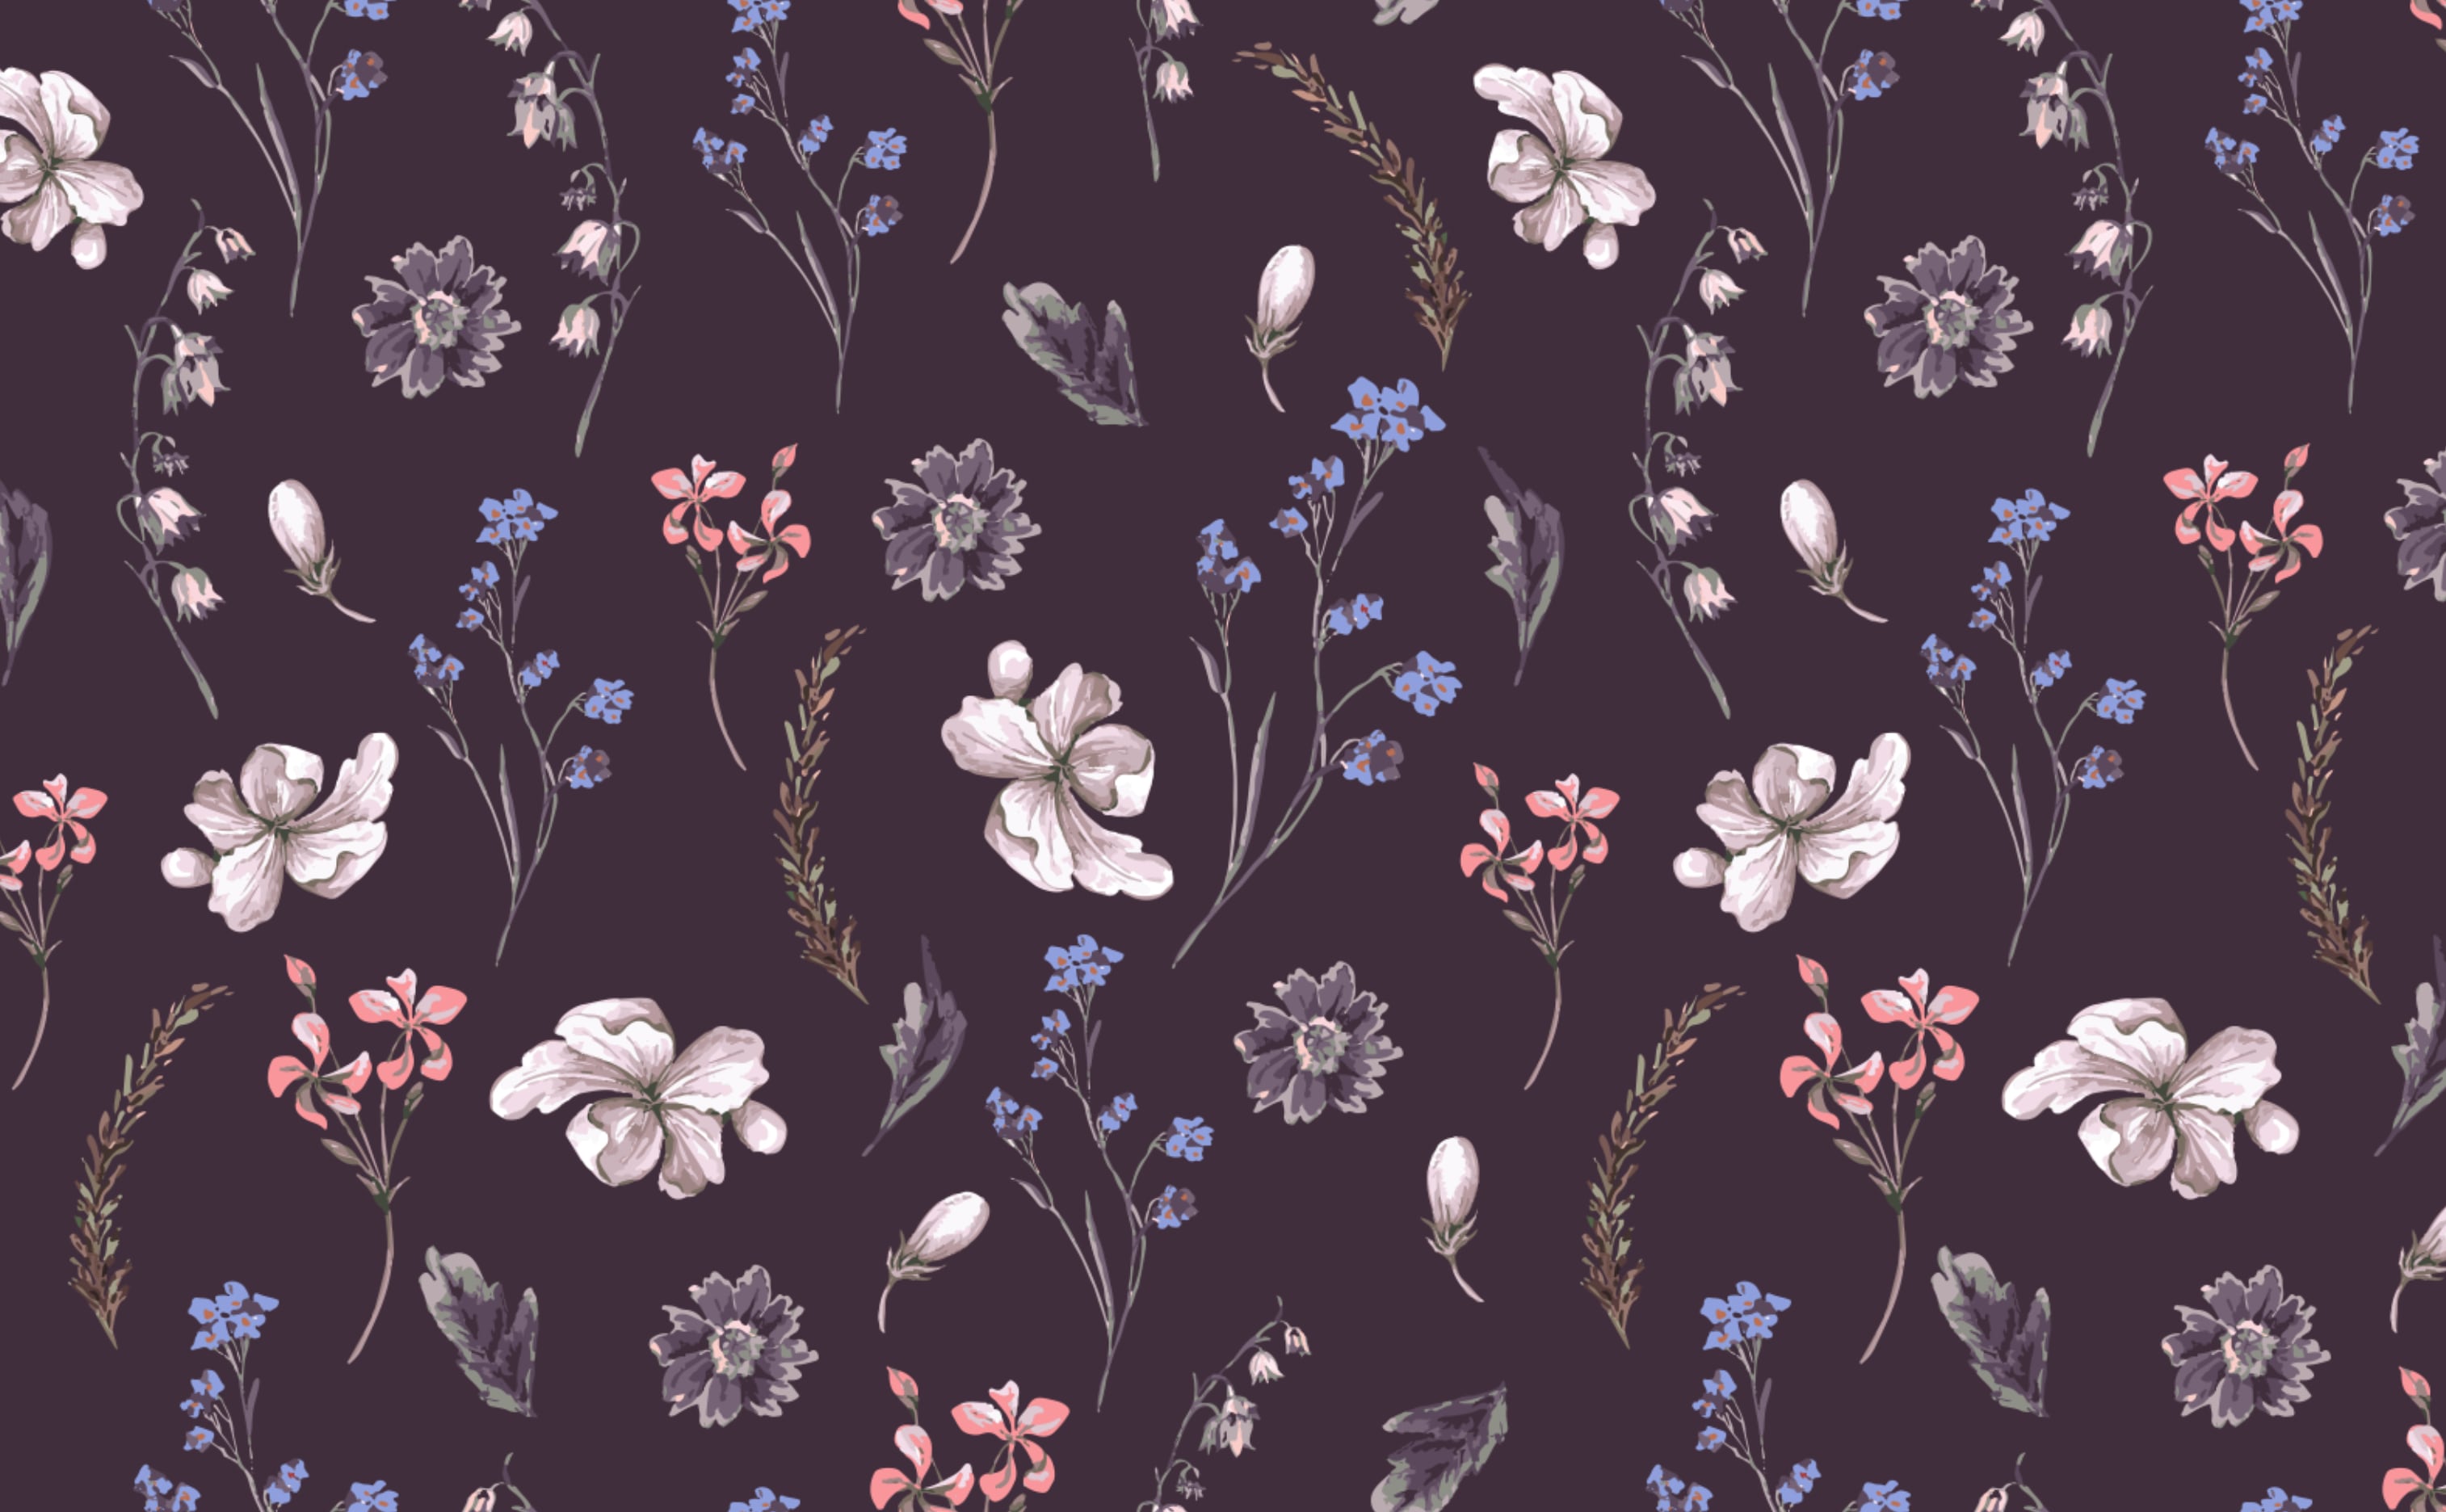 Floral print wallpaper